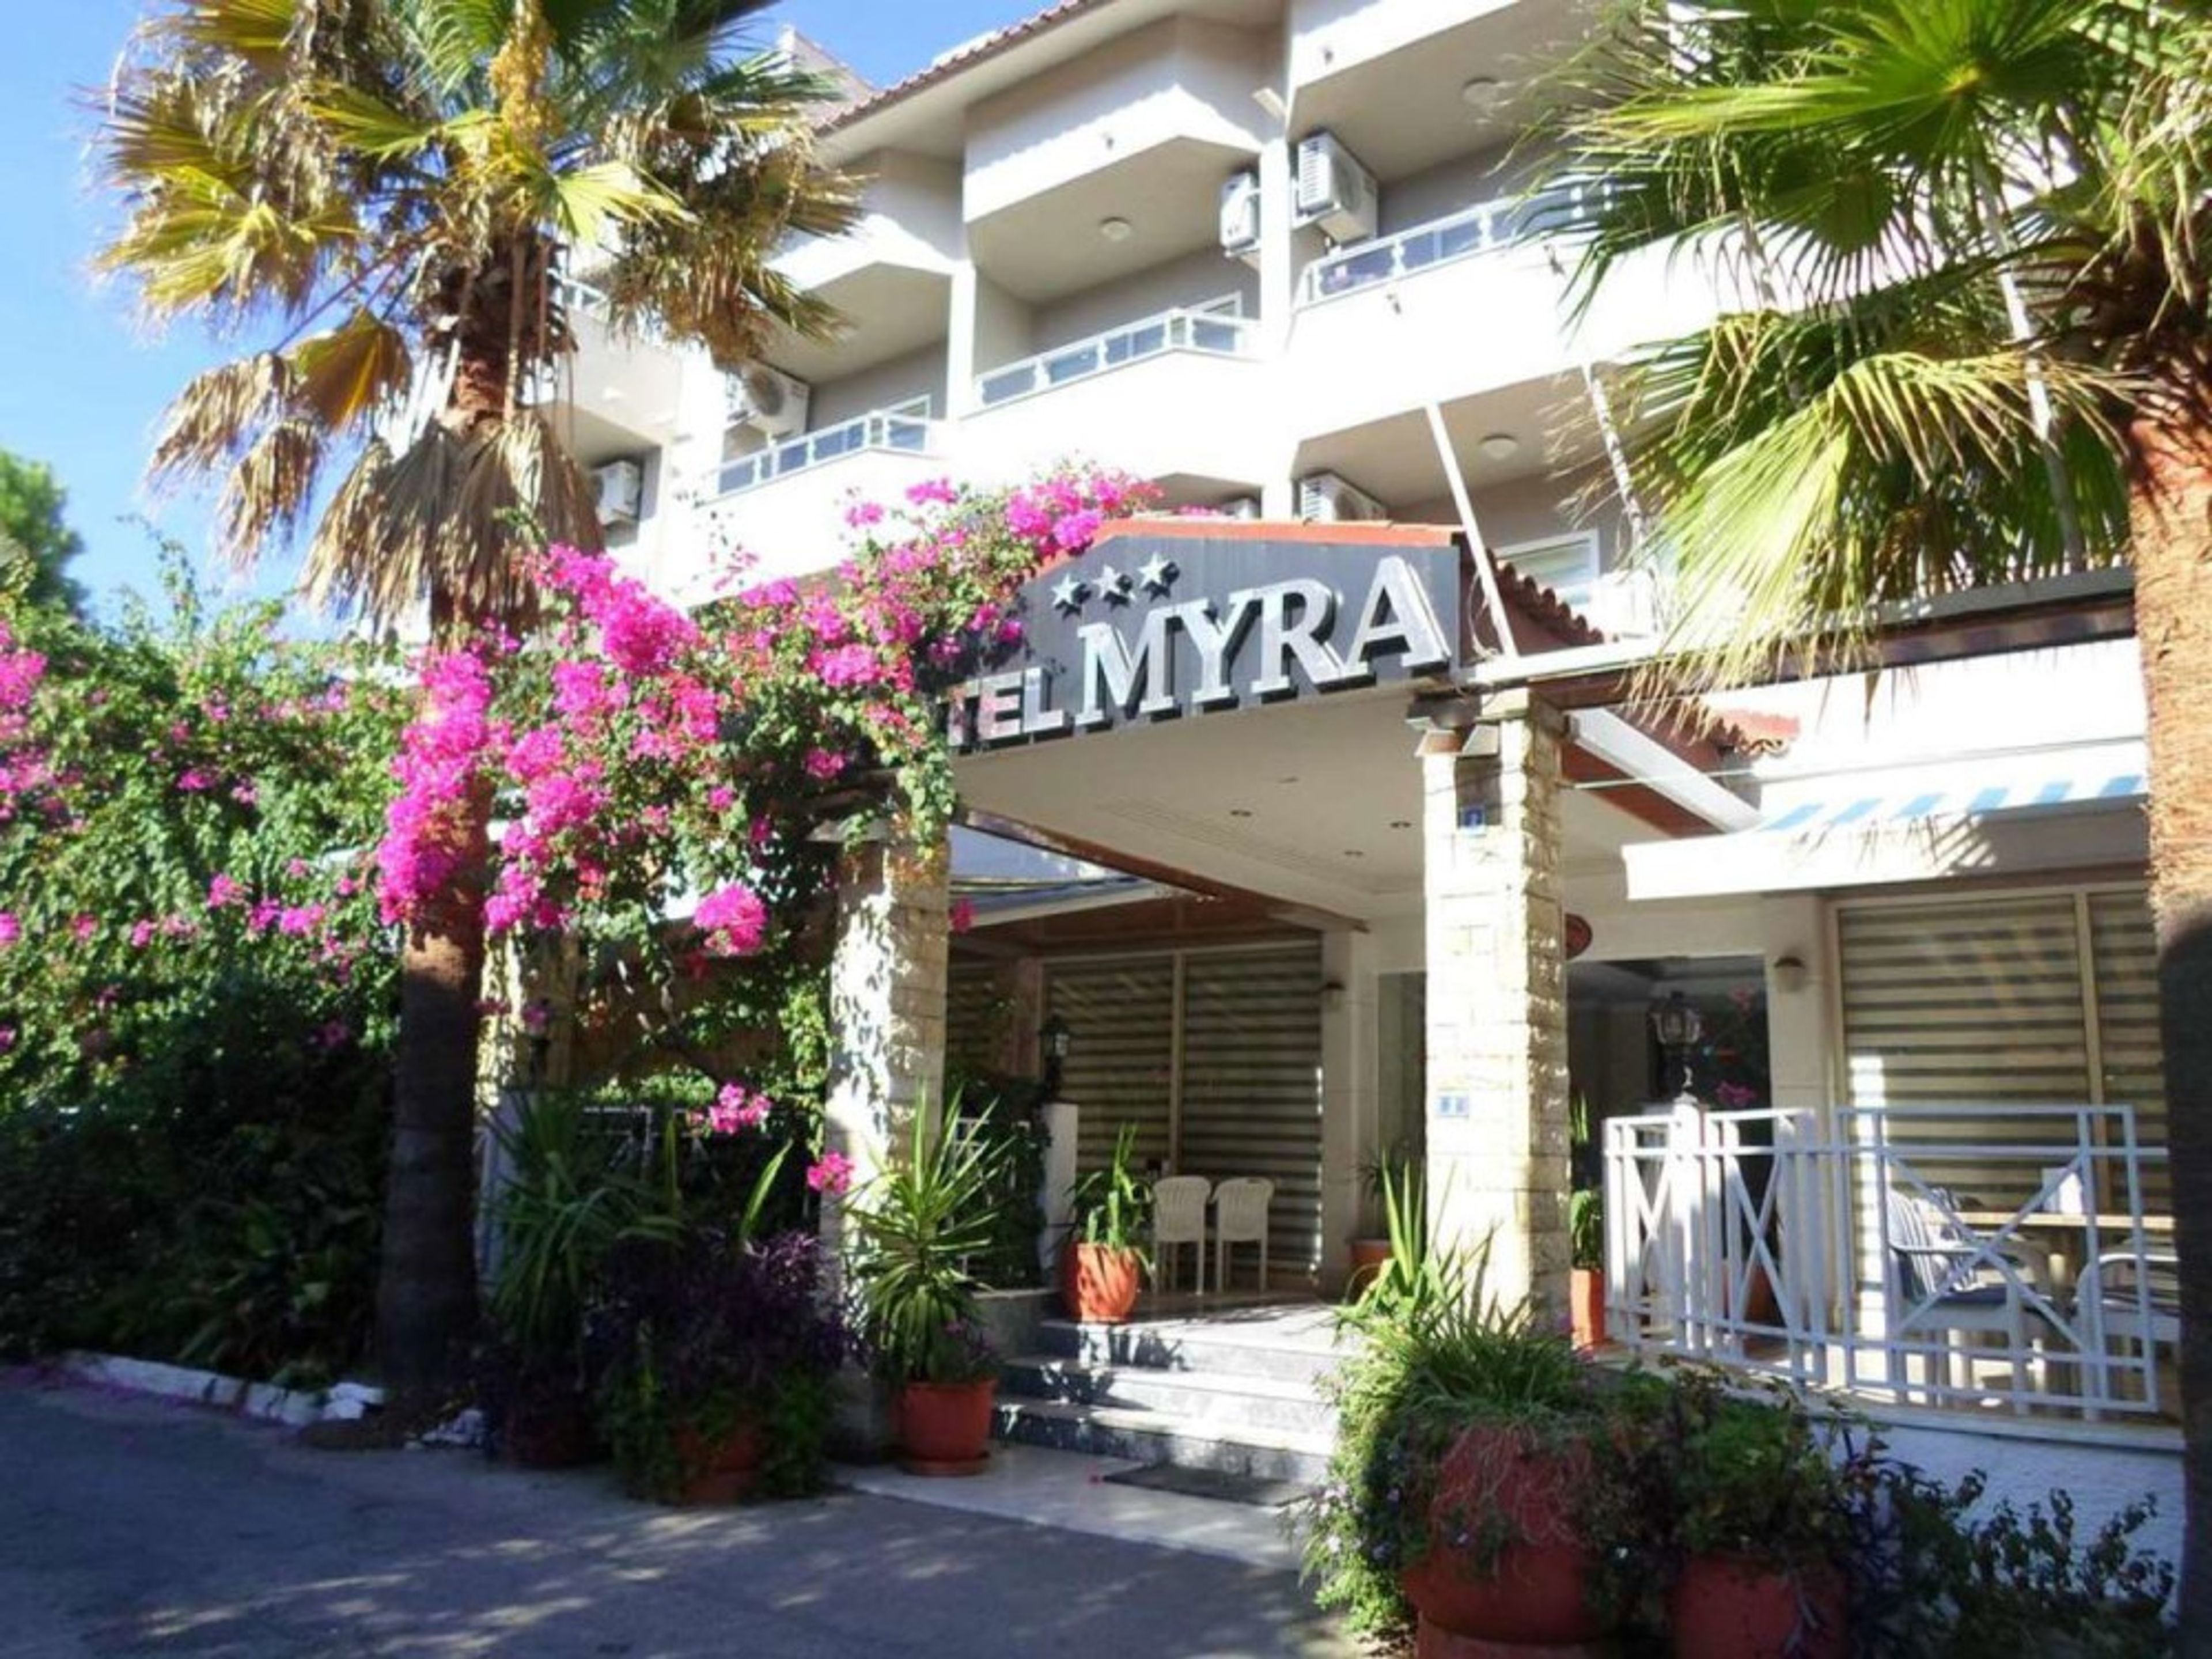 Myra Hotel foto 3